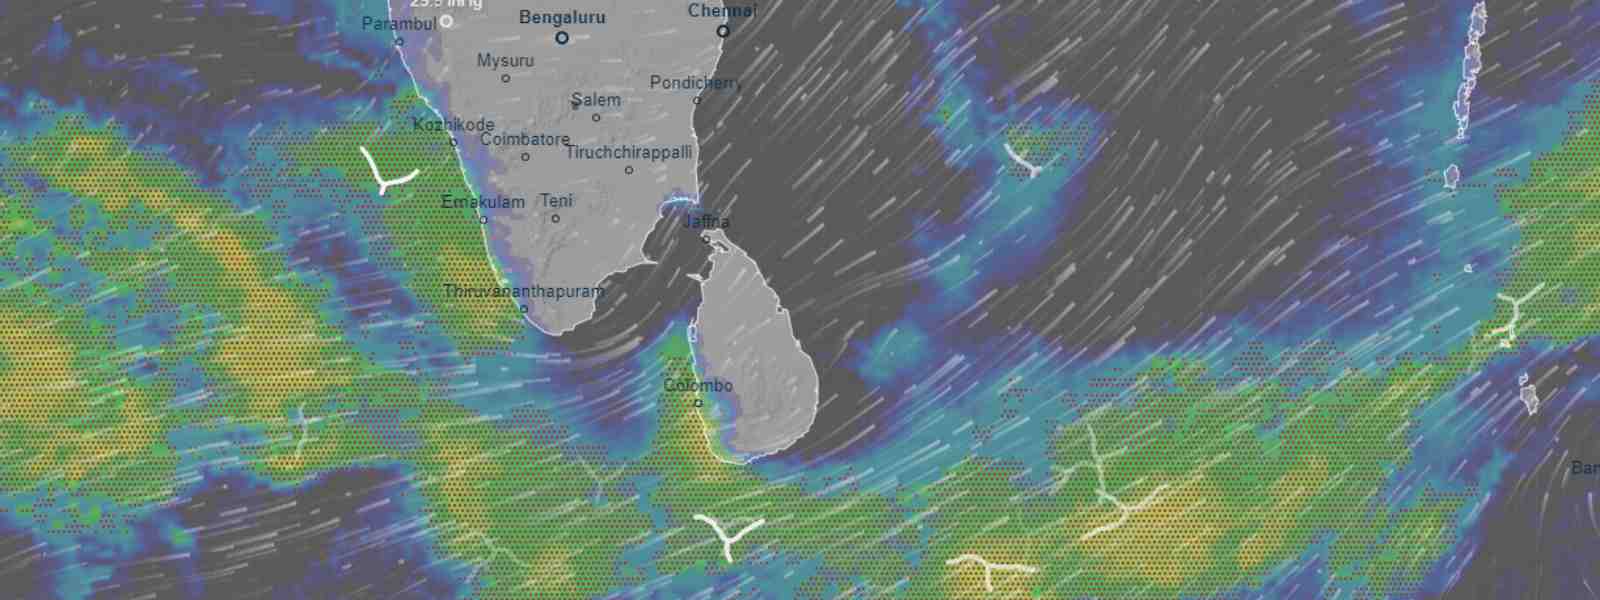 South-West monsoon establishing over Sri Lanka